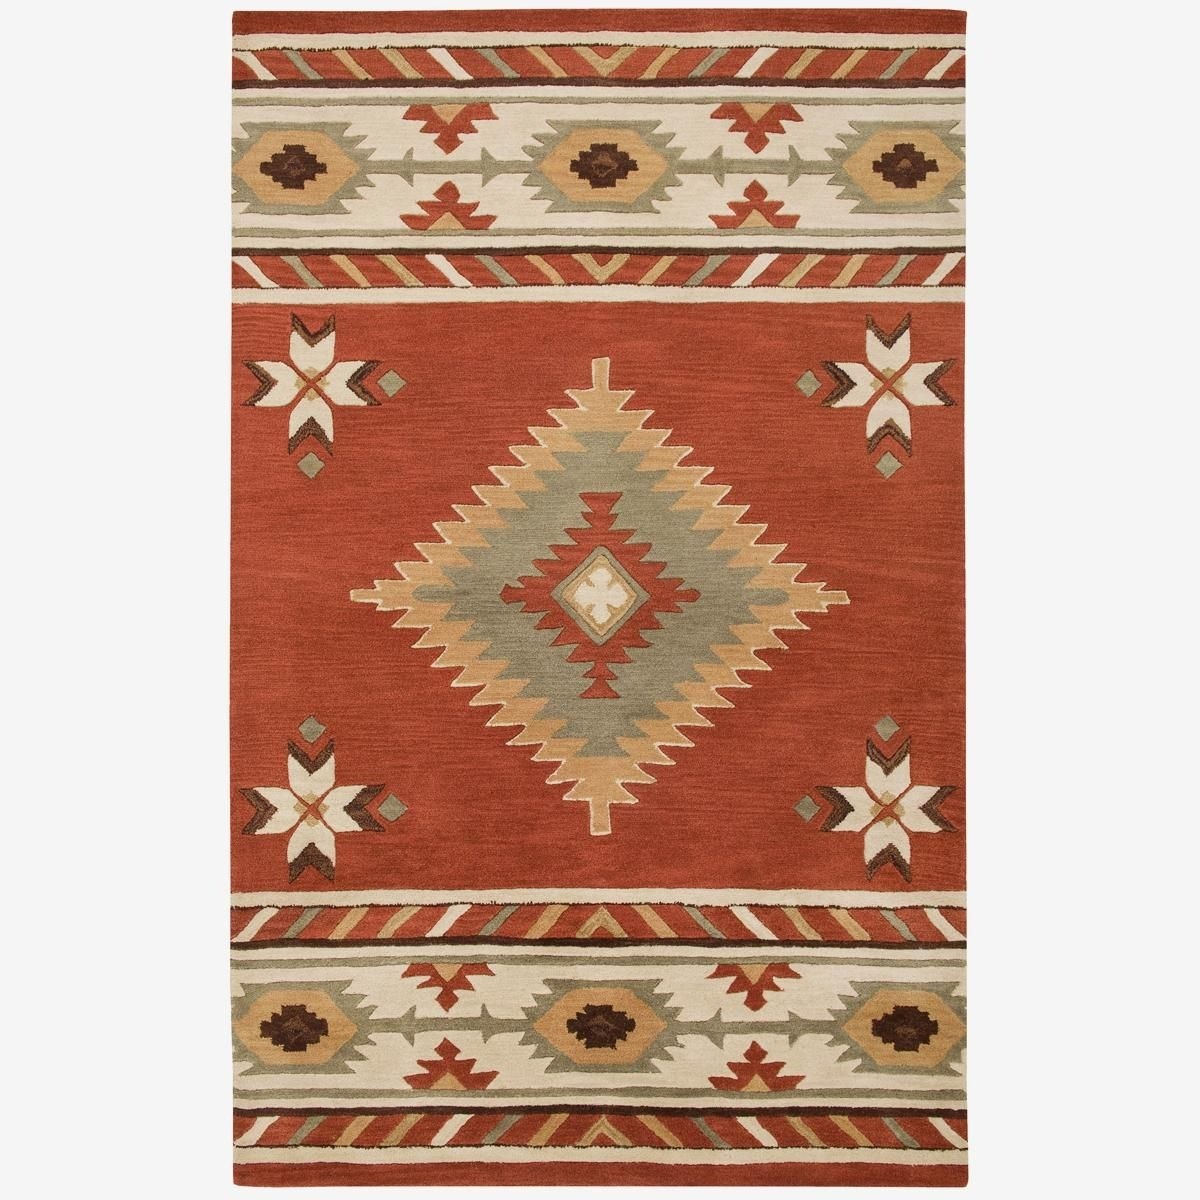 Navajo inspired rugs